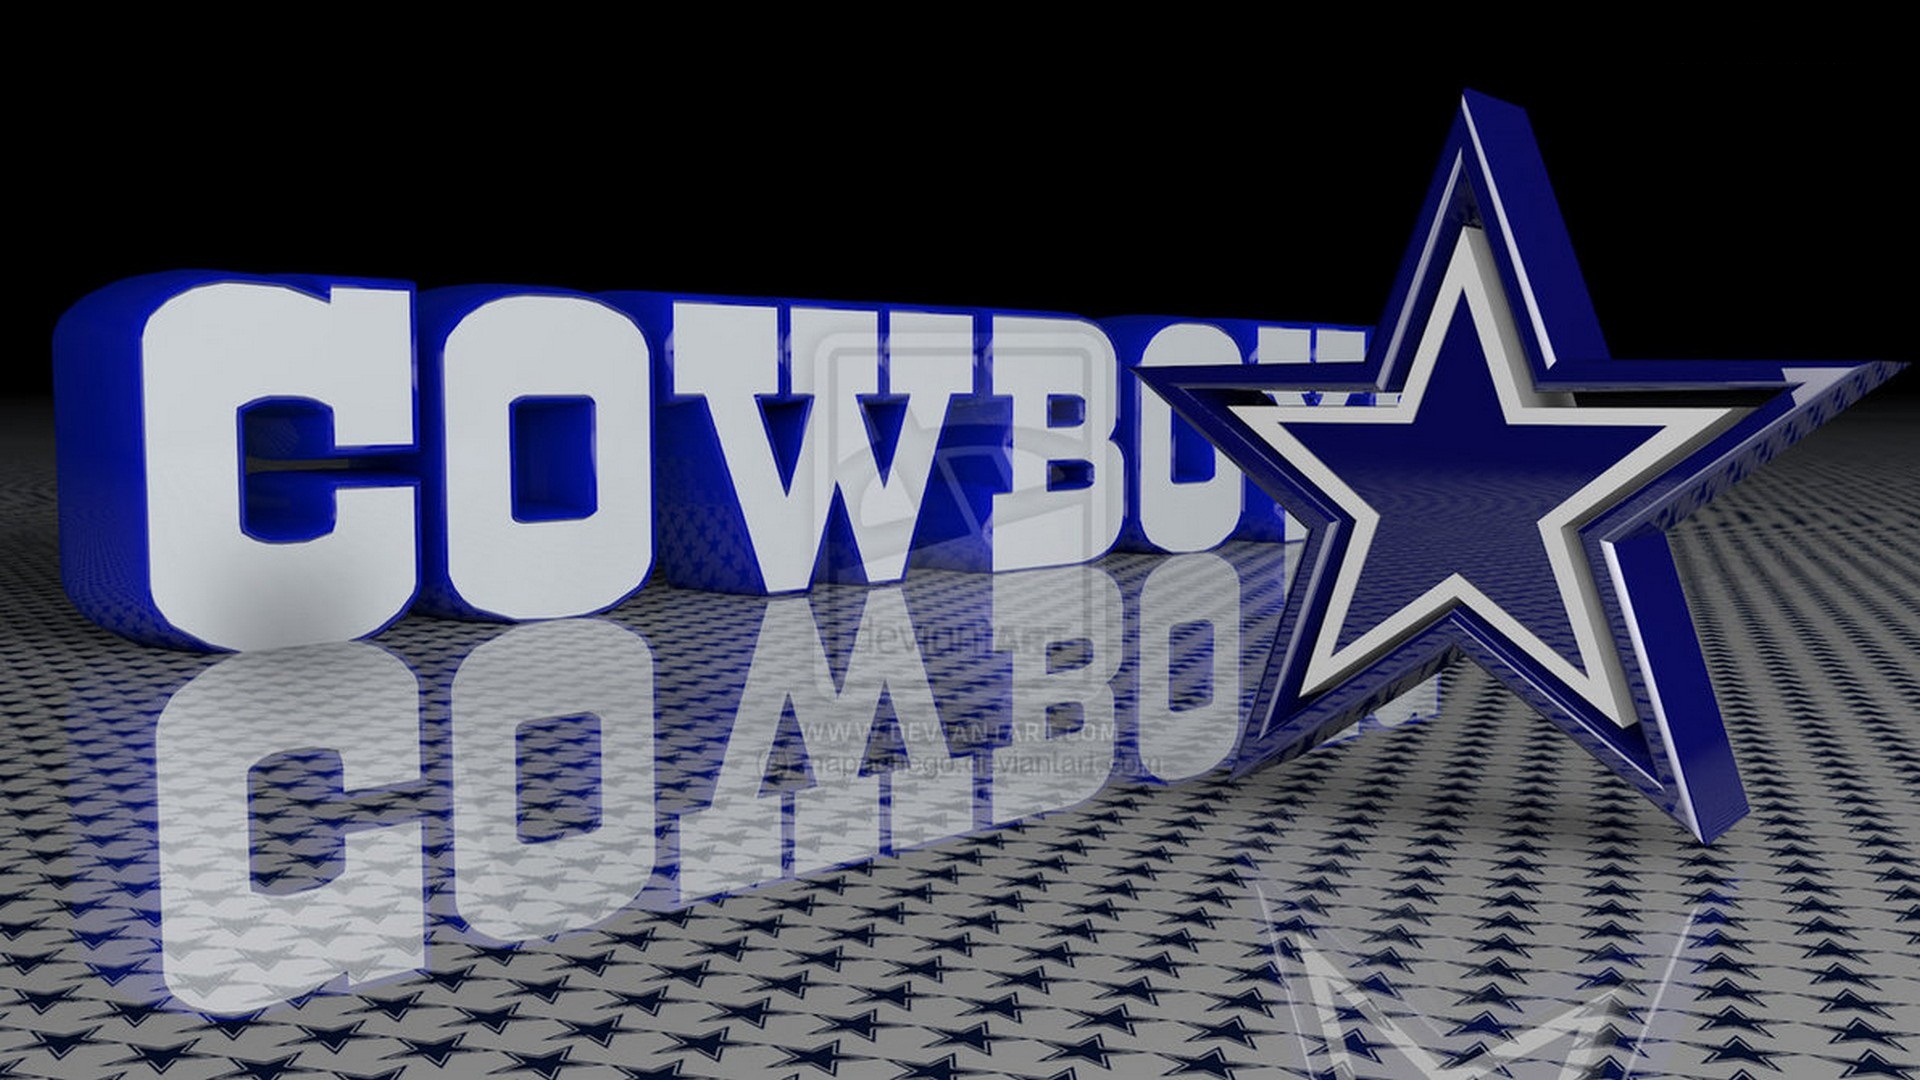 Dallas Cowboys Background HD Nfl Football Wallpaper